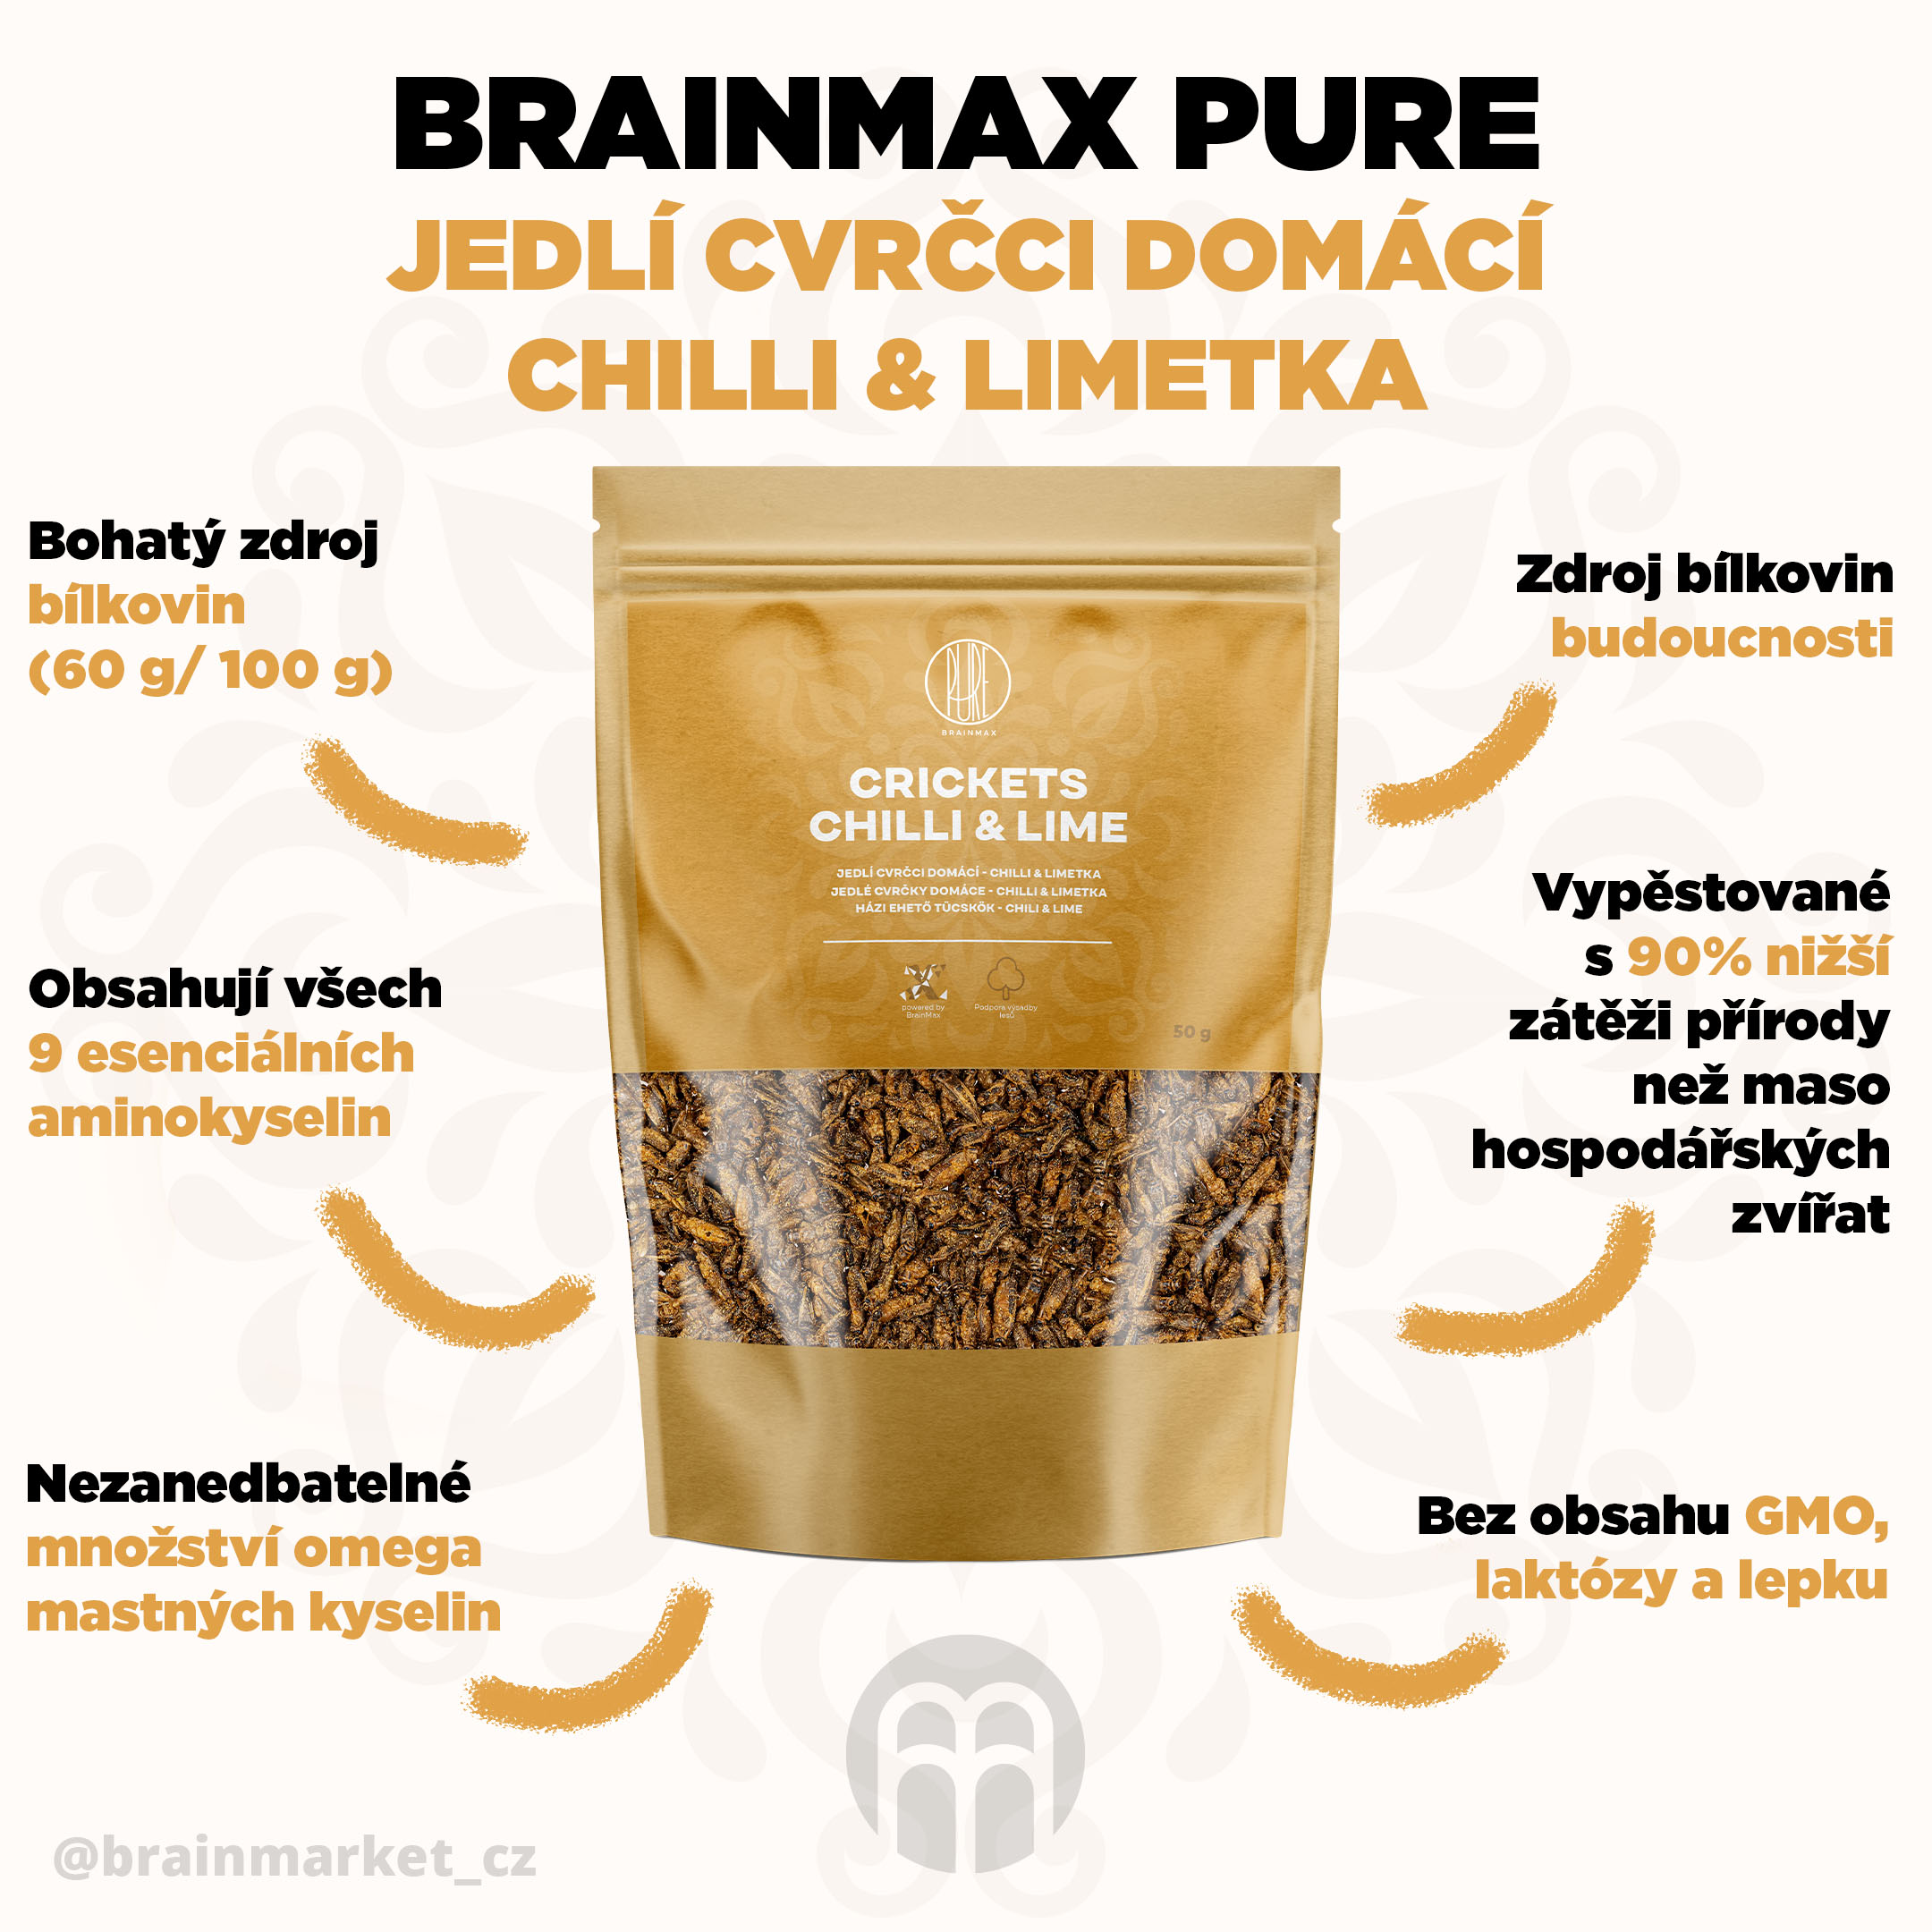 brainmax pure cvrcci chili lime infografiki brainmarket CZ